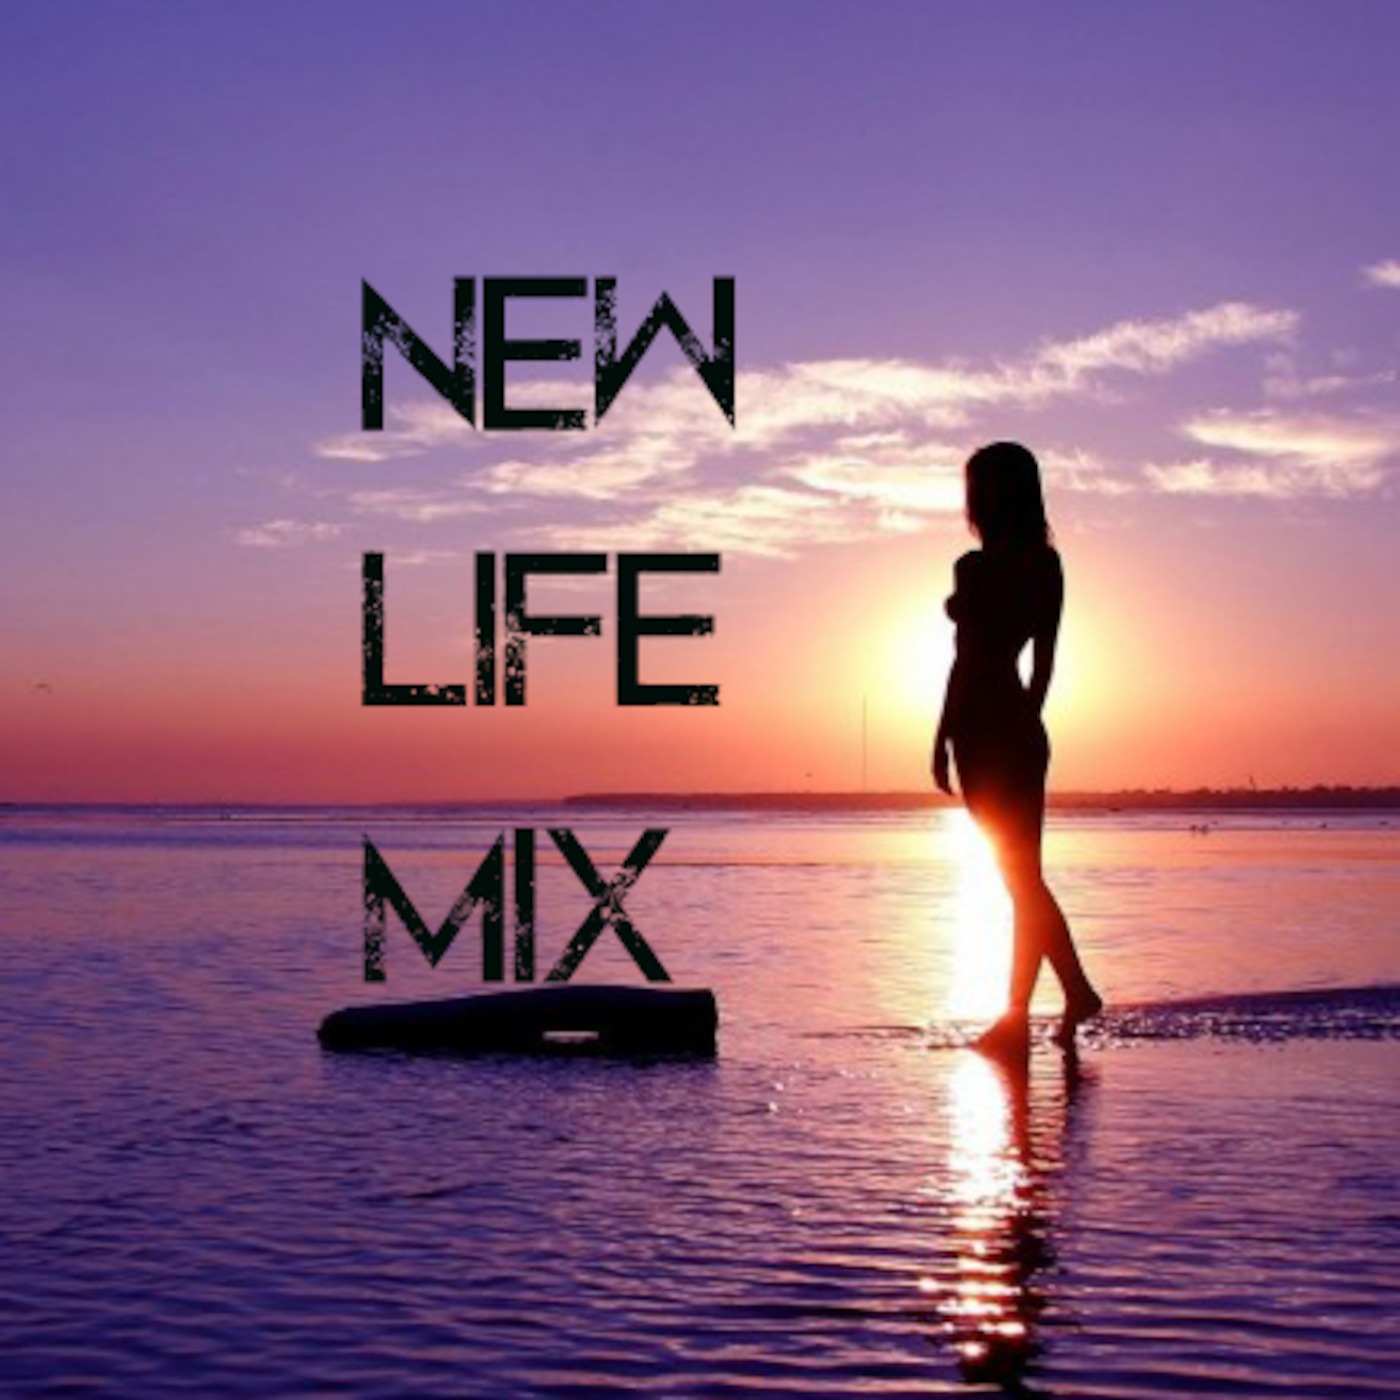 Start new life. The New Life. New Life картинки. New Life аватарка. New Life надпись.